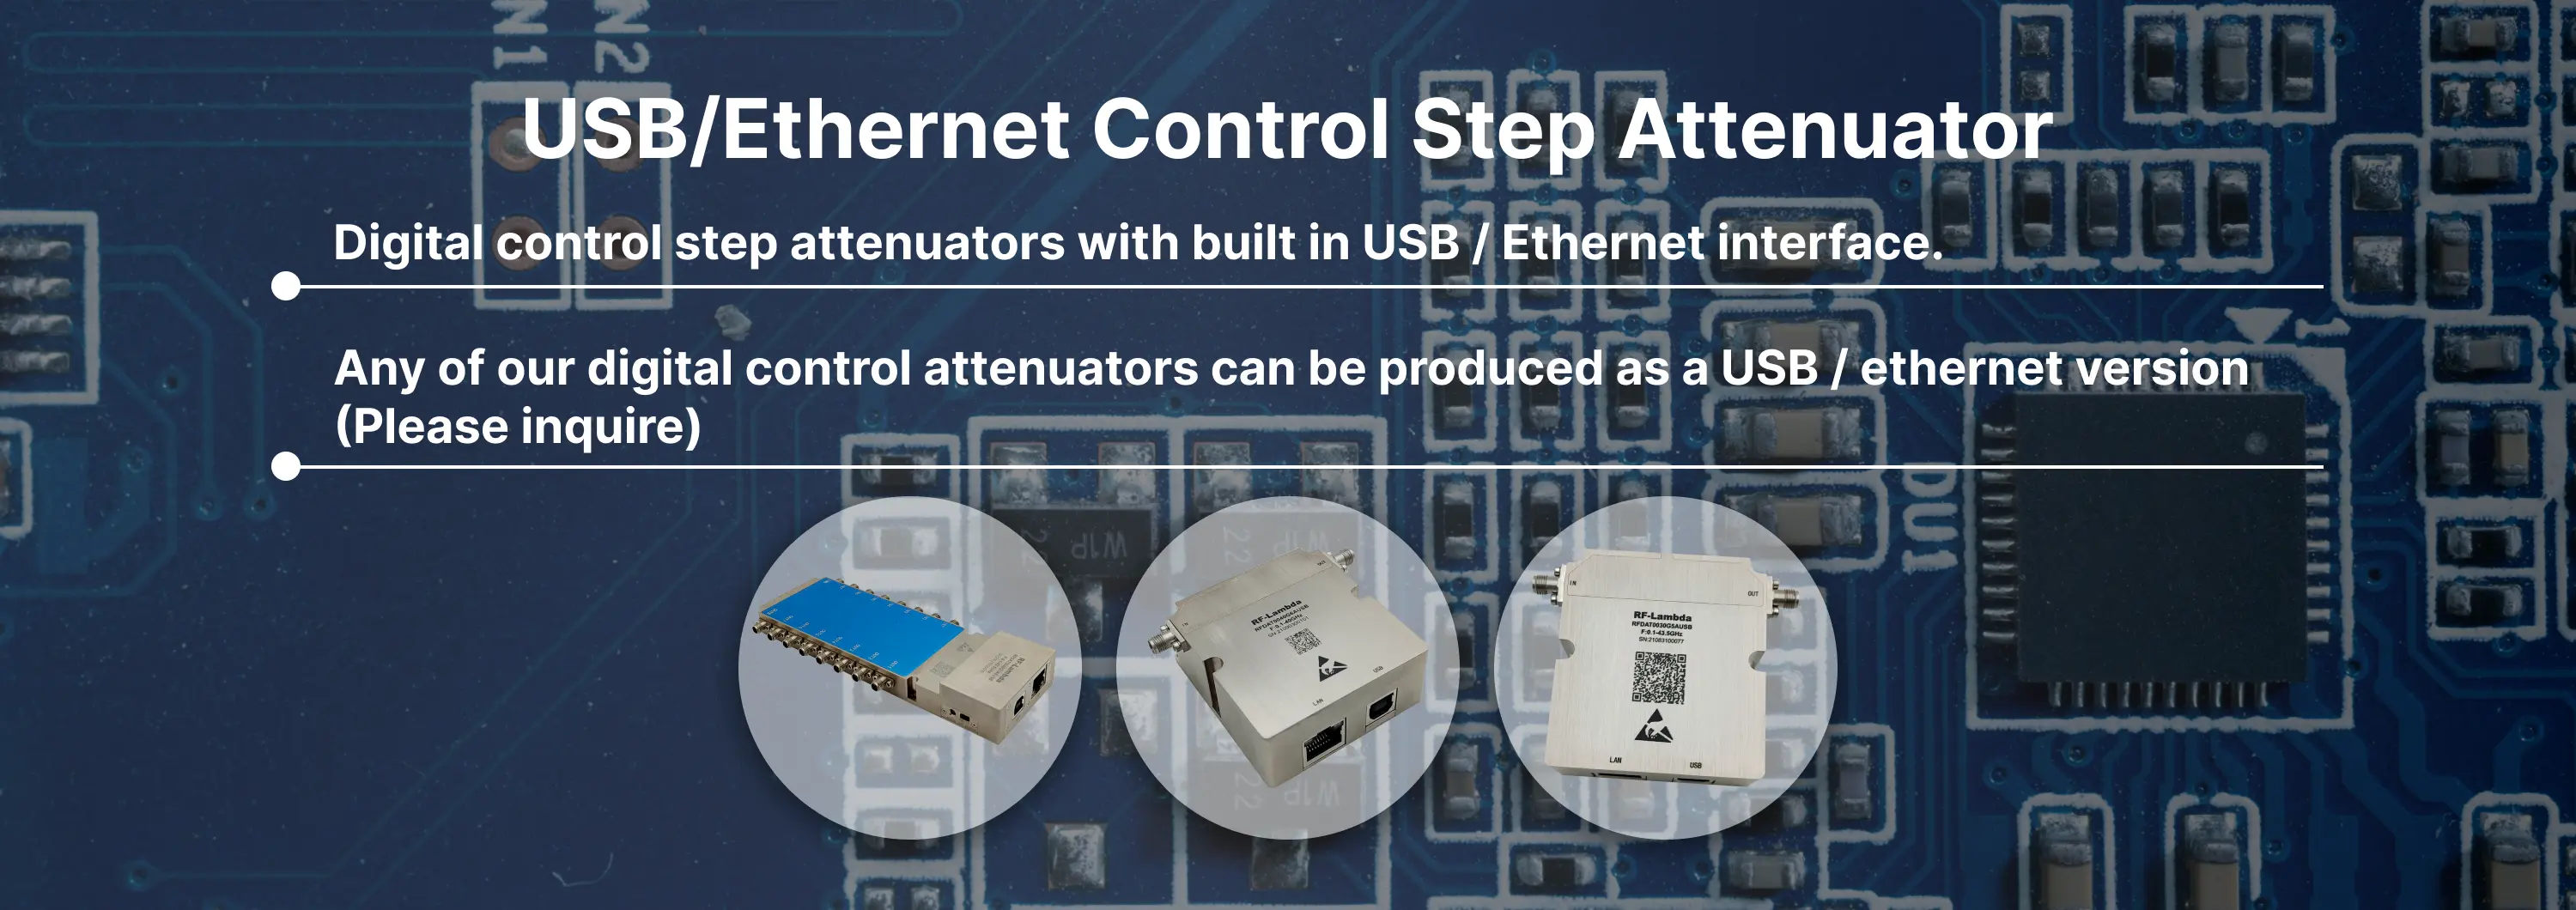 USB/Ethernet Control Step Attenuator Banner